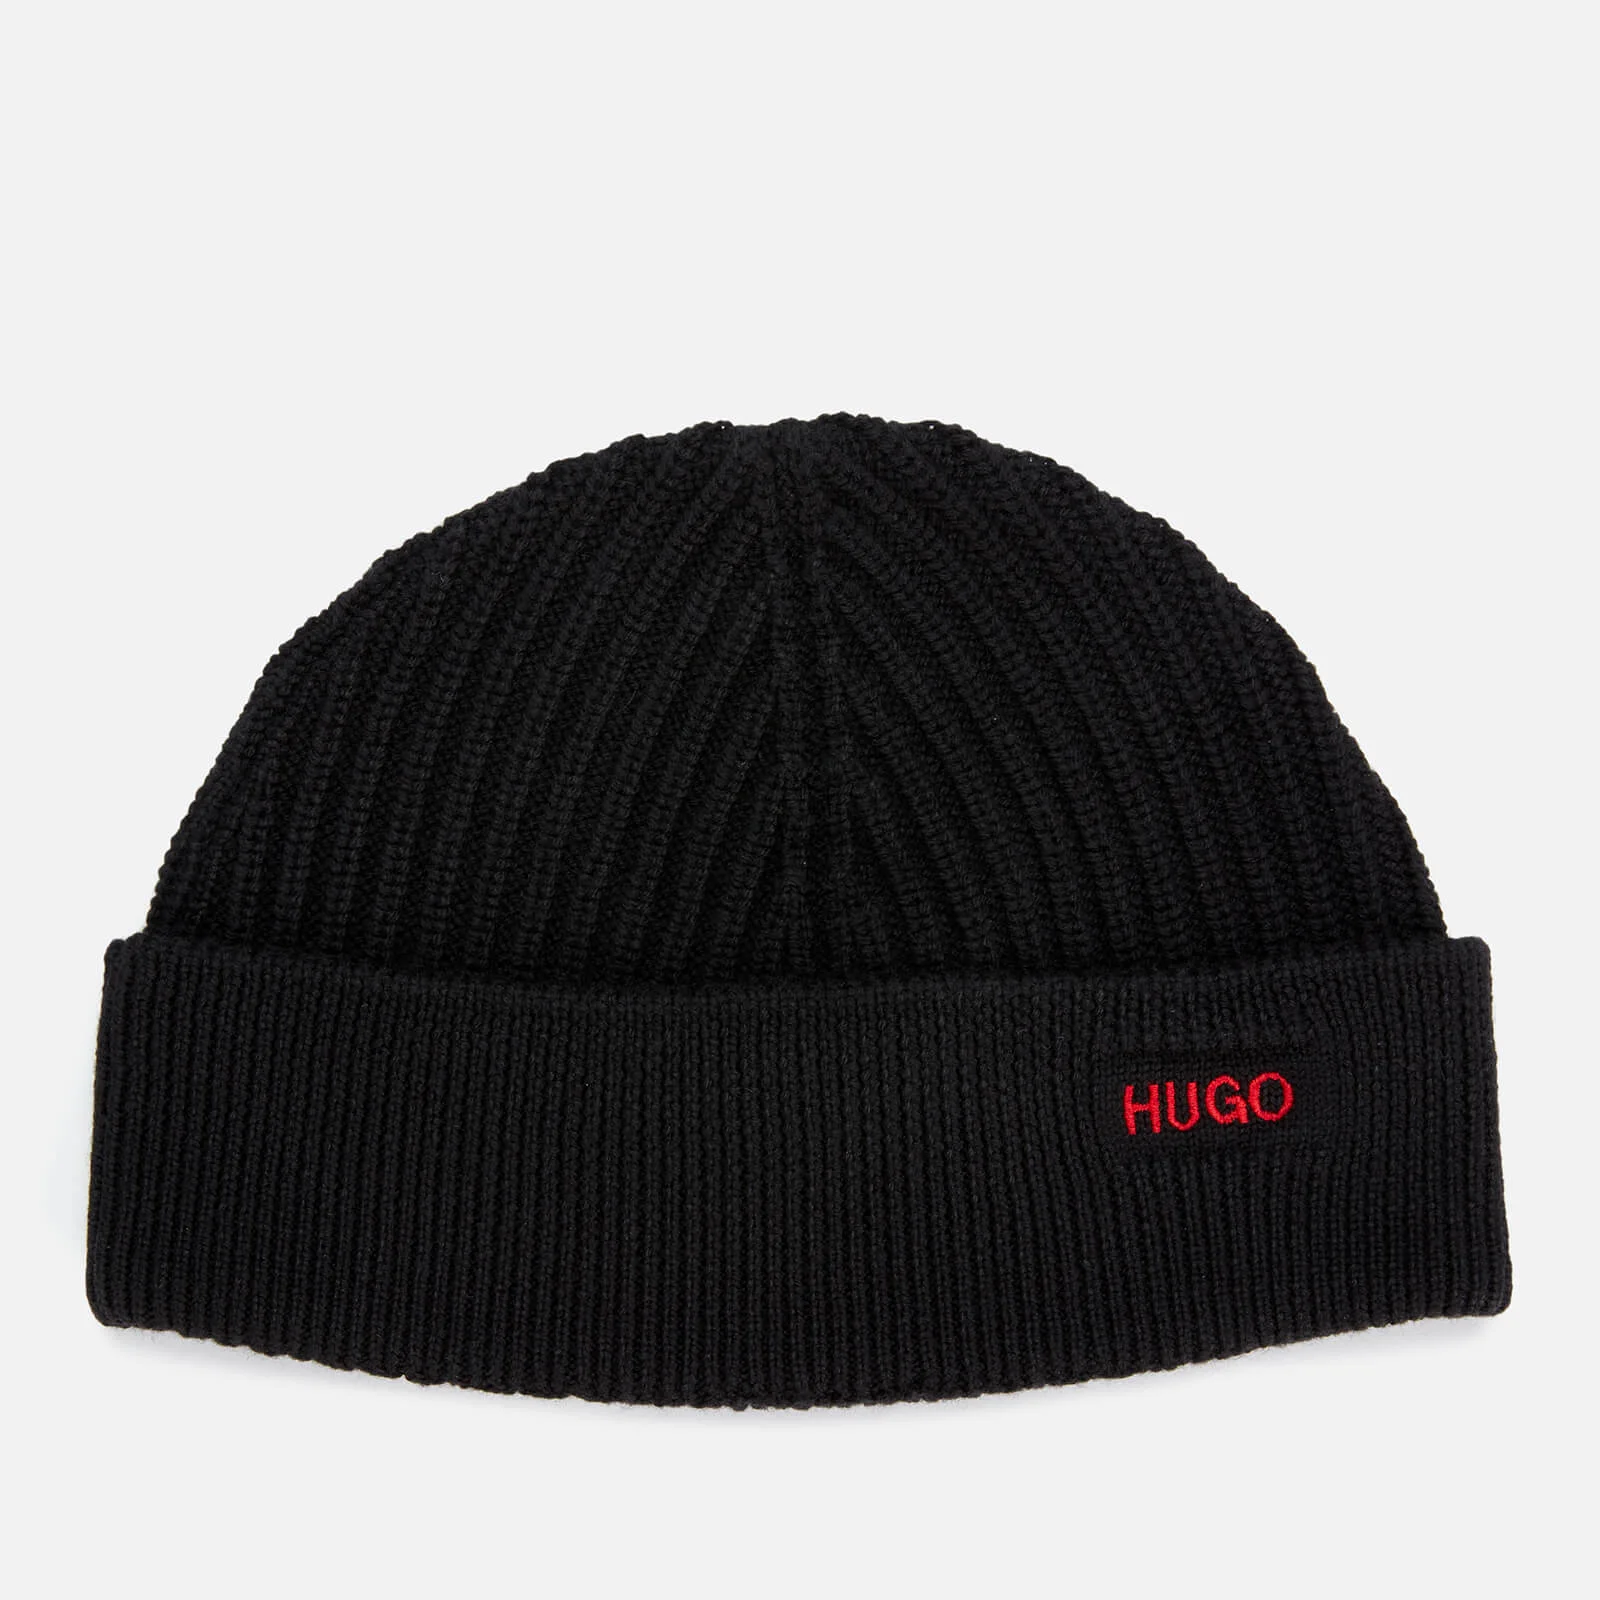 HUGO Men's Xianno 3 Hat - Black Image 1